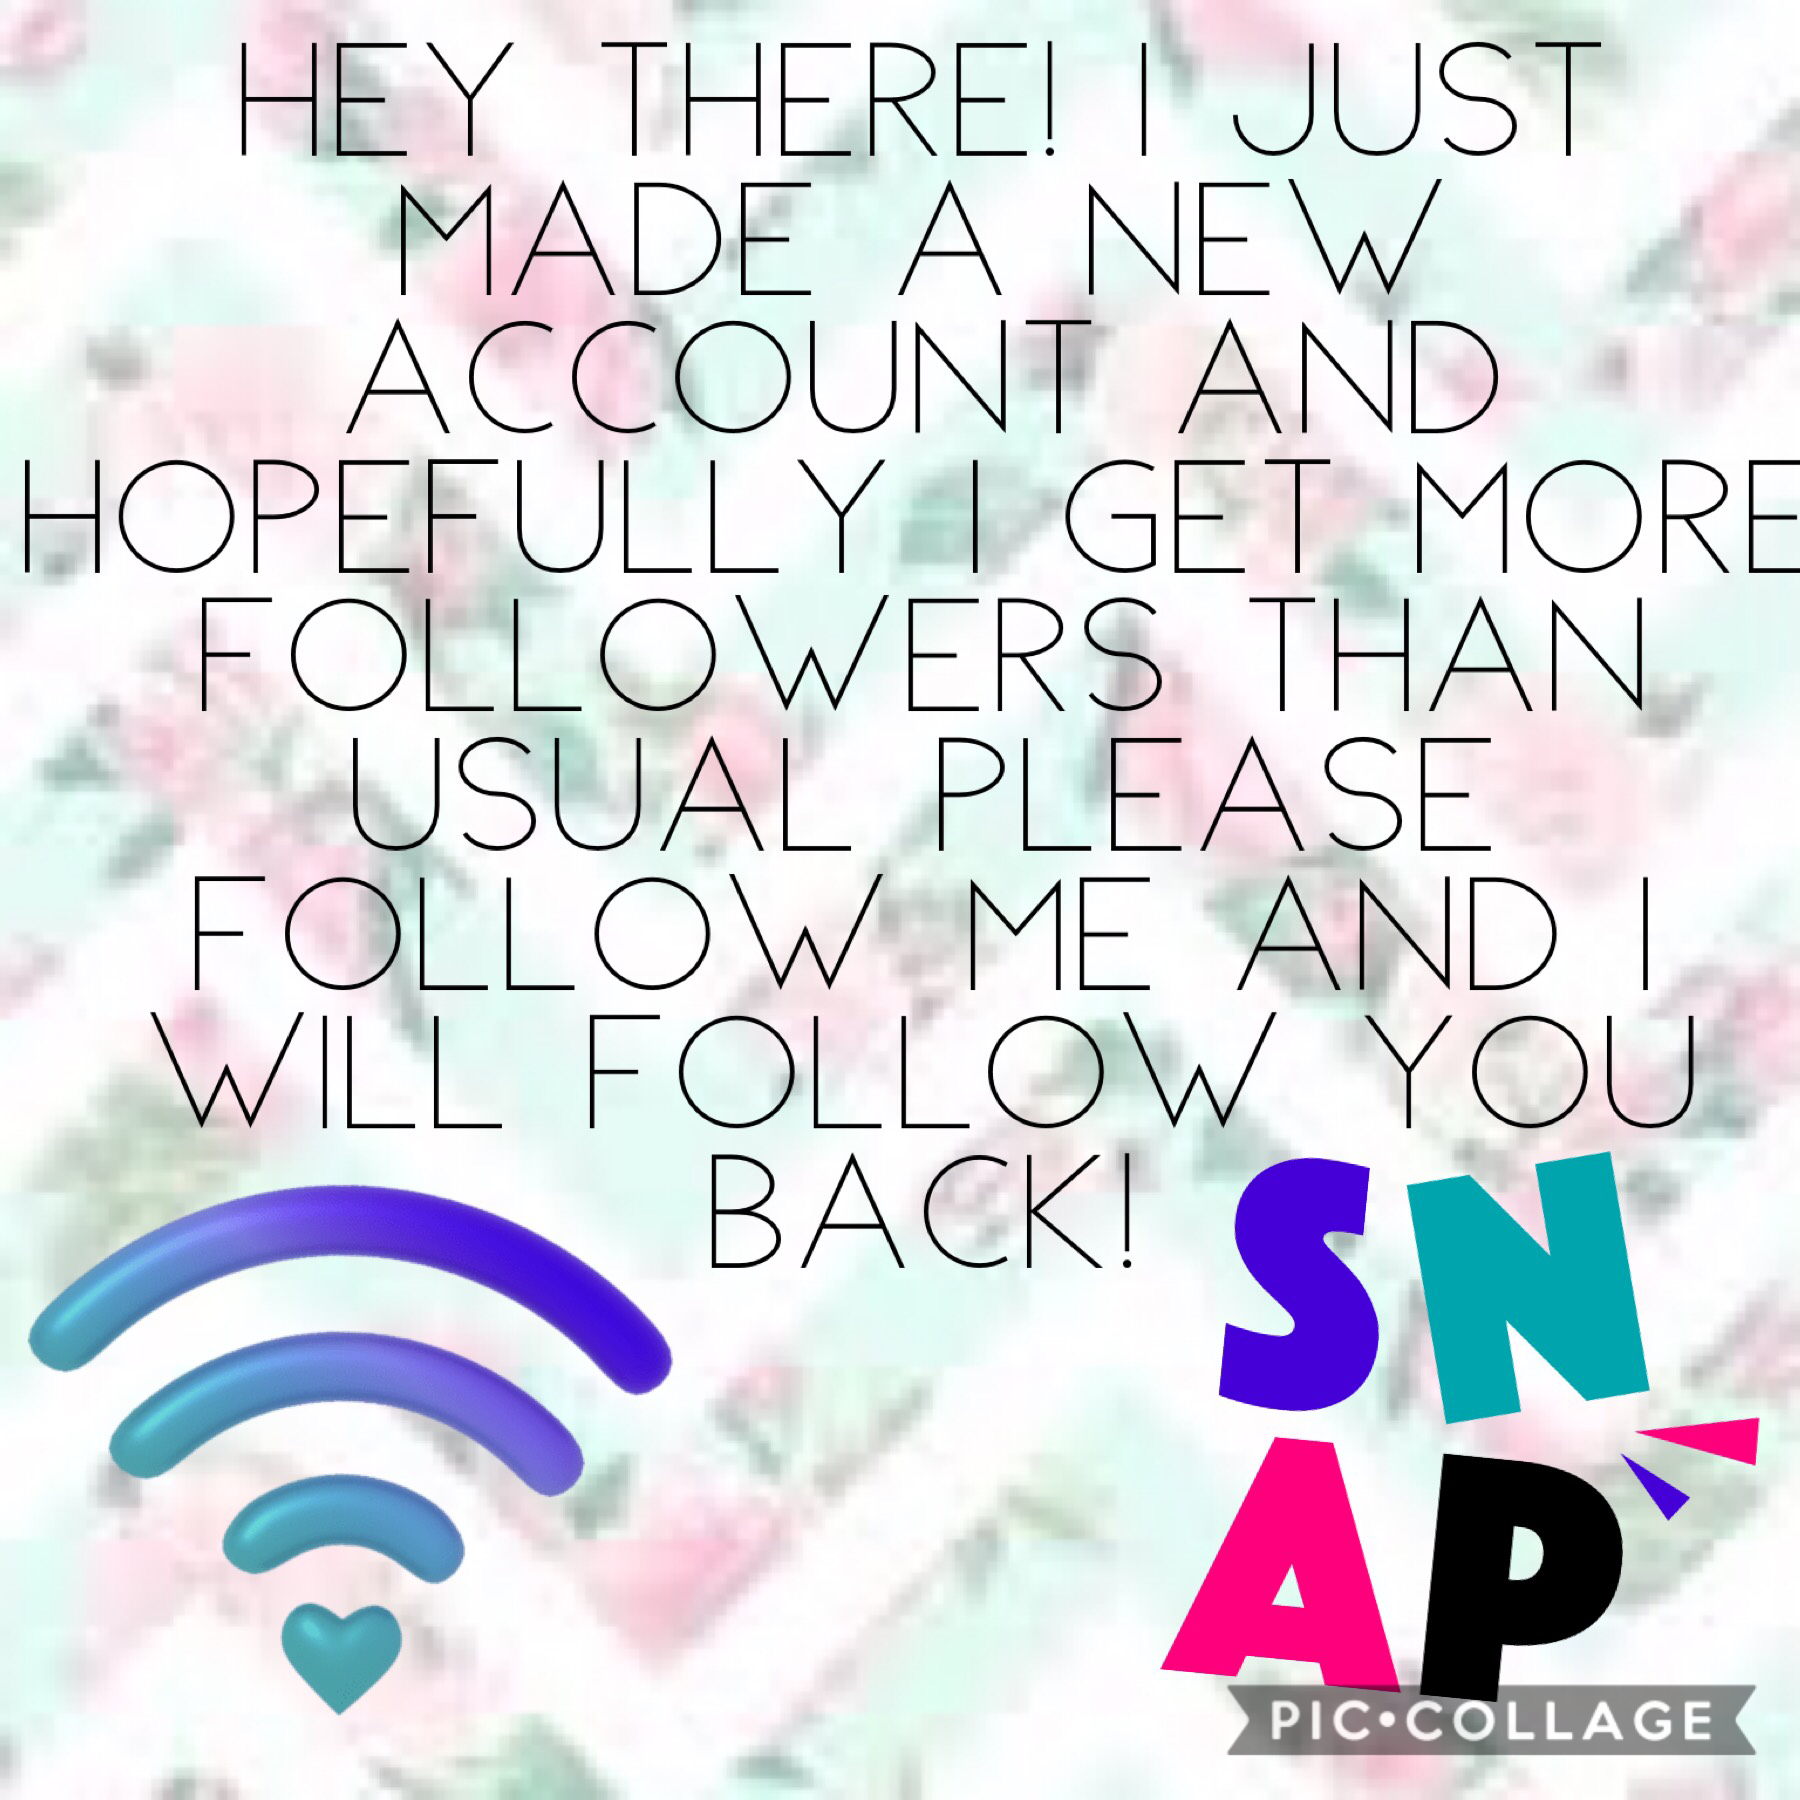 Please follow me!